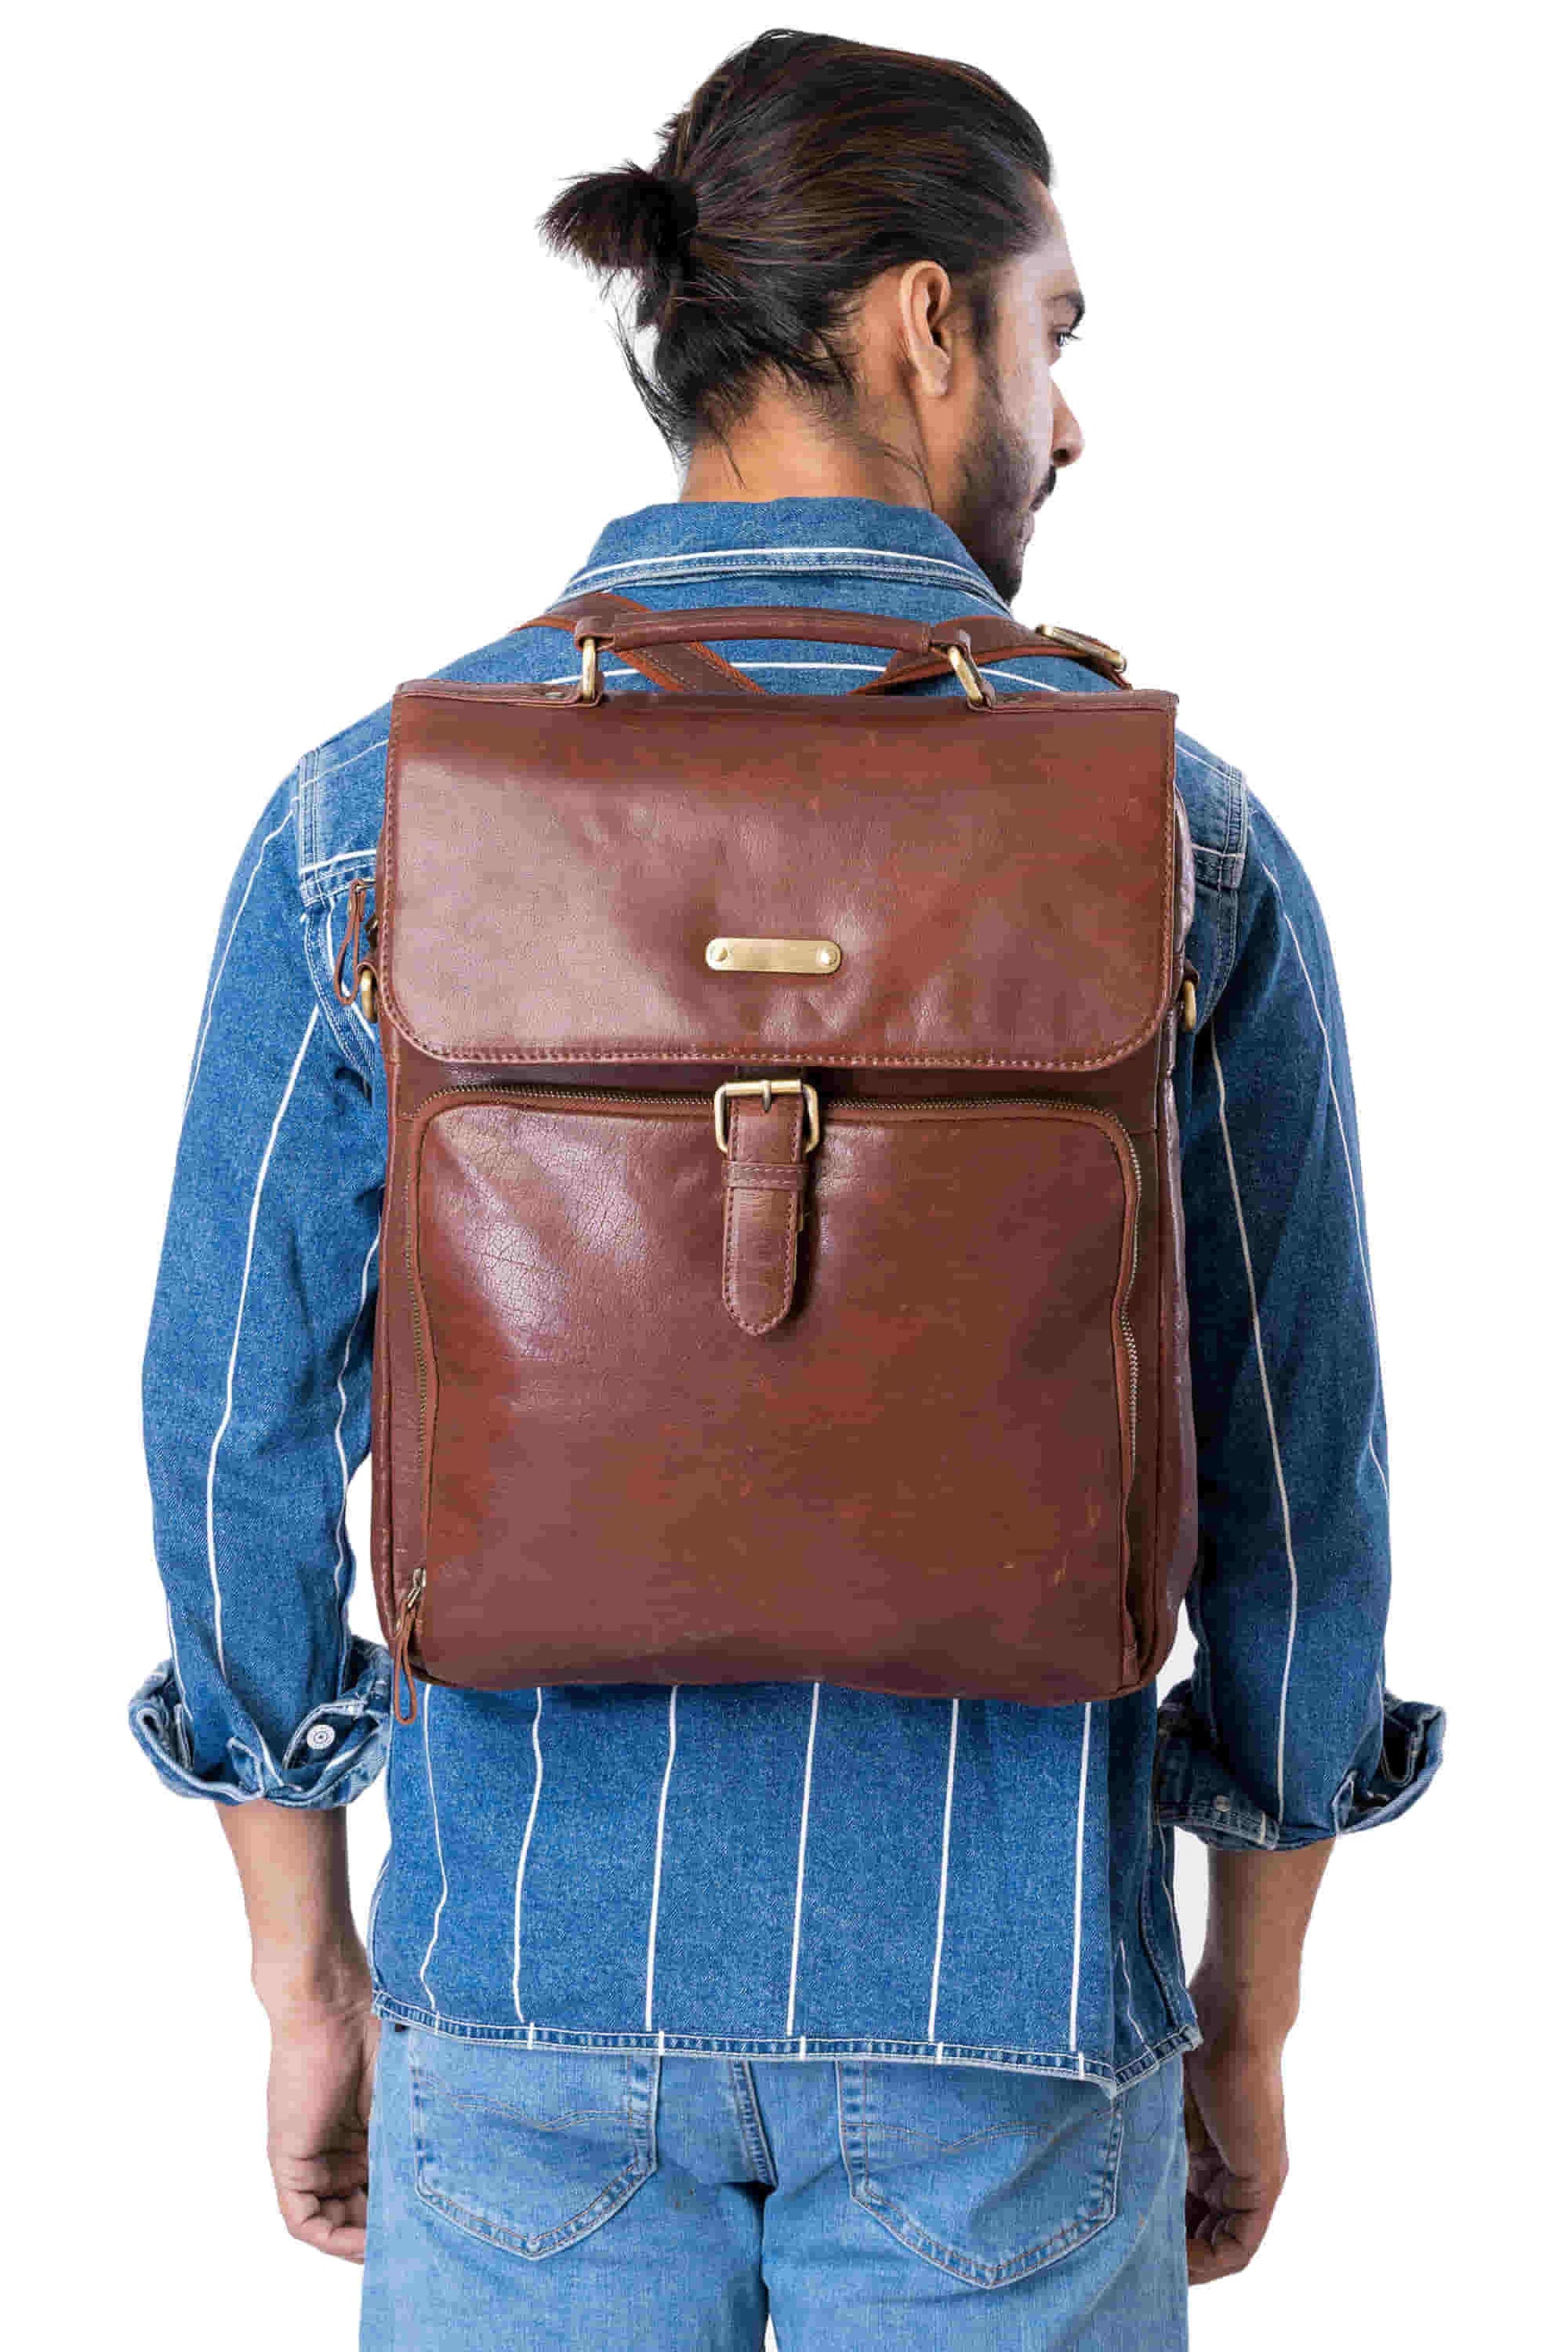 Style n Craft 392600 Cross Body Messenger Bag & Backpack in Full Grain Dark Brown Vintage Leather - in use as a backpack